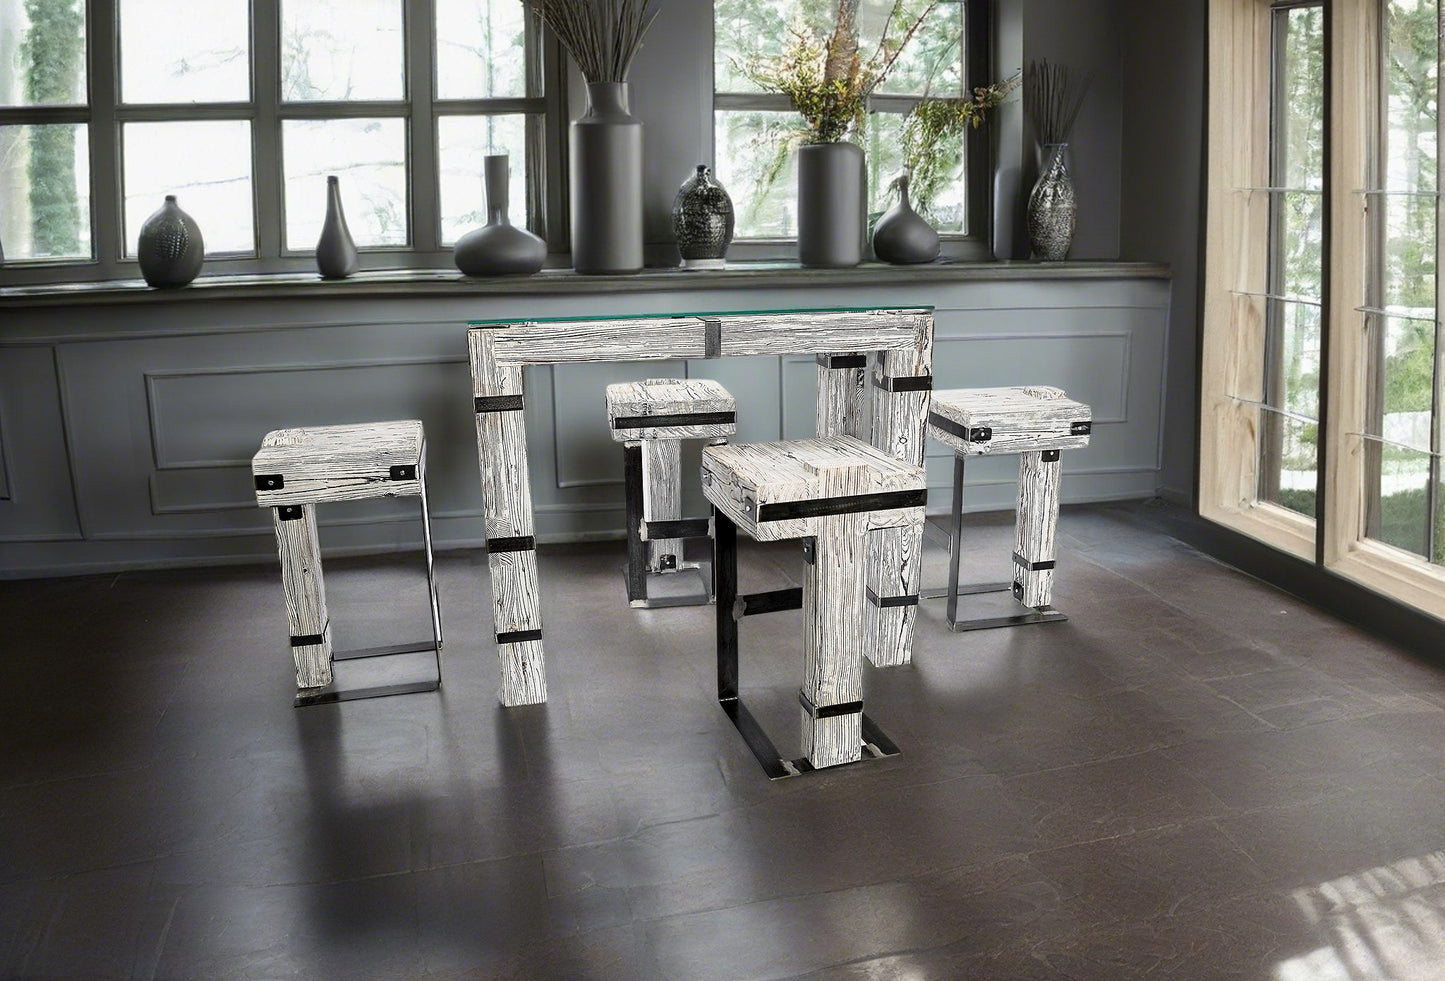 CHYRKA® Dining table living room table DROHOBYCZ stool loft vintage bar industrial design handmade wood glass metal